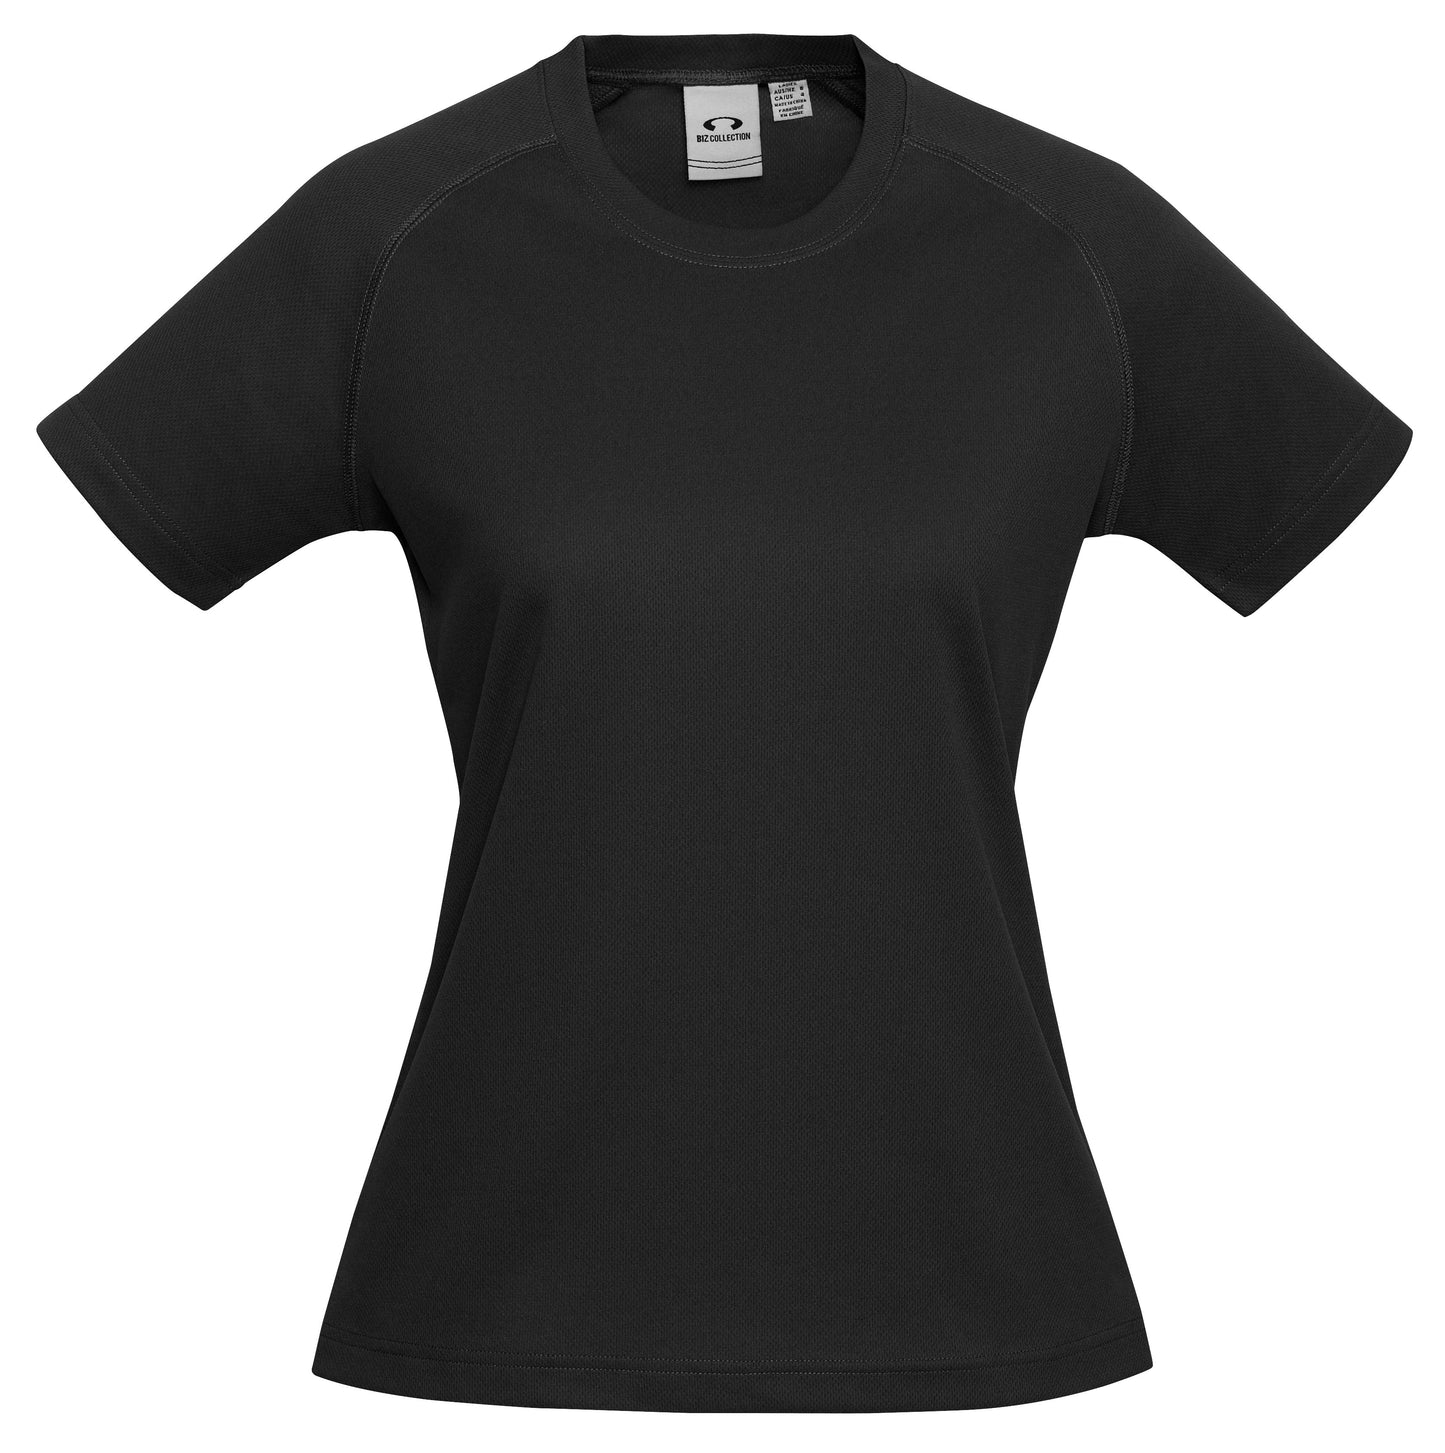 Ladies Sprint T-Shirt - Black Only